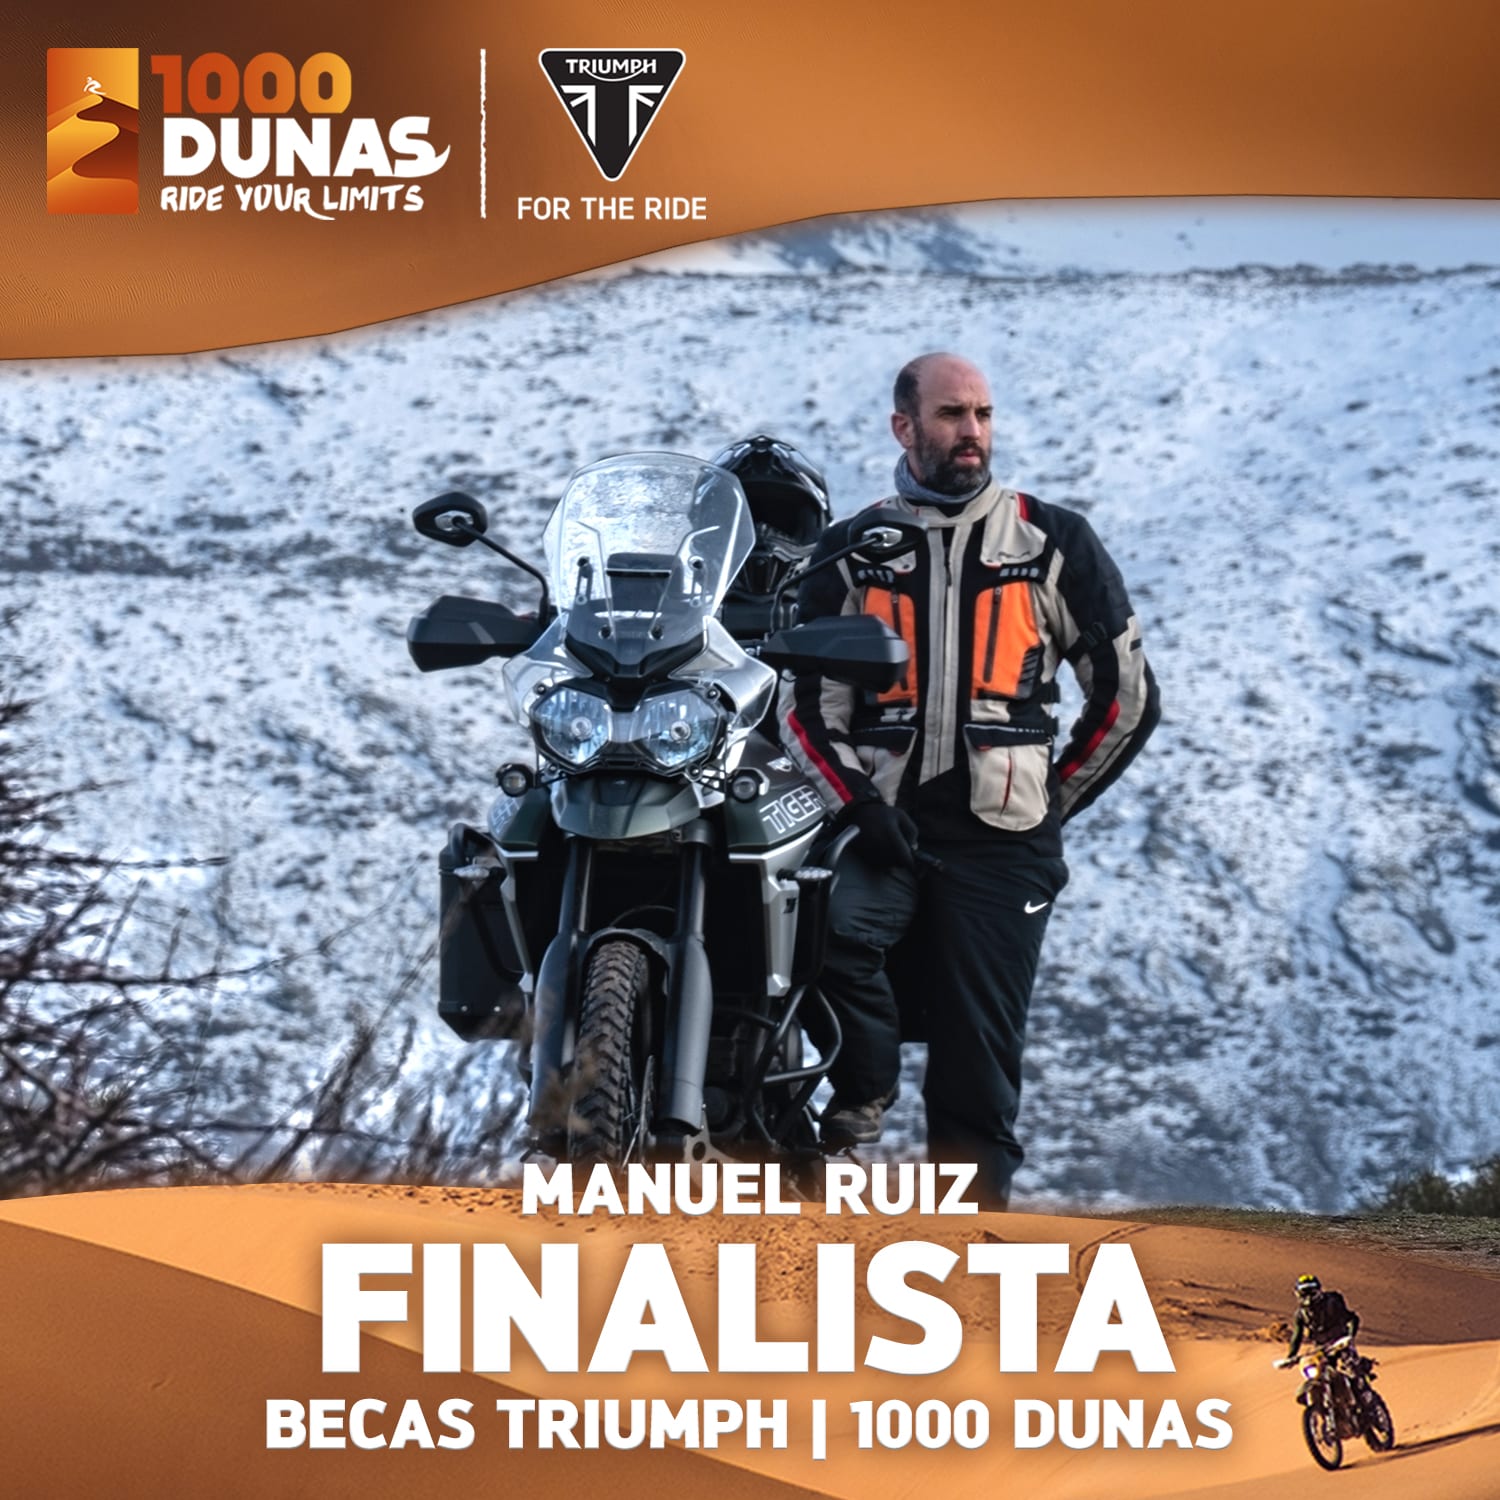 Manuel Ruiz Finalista Becas Triumph 1000 Dunas